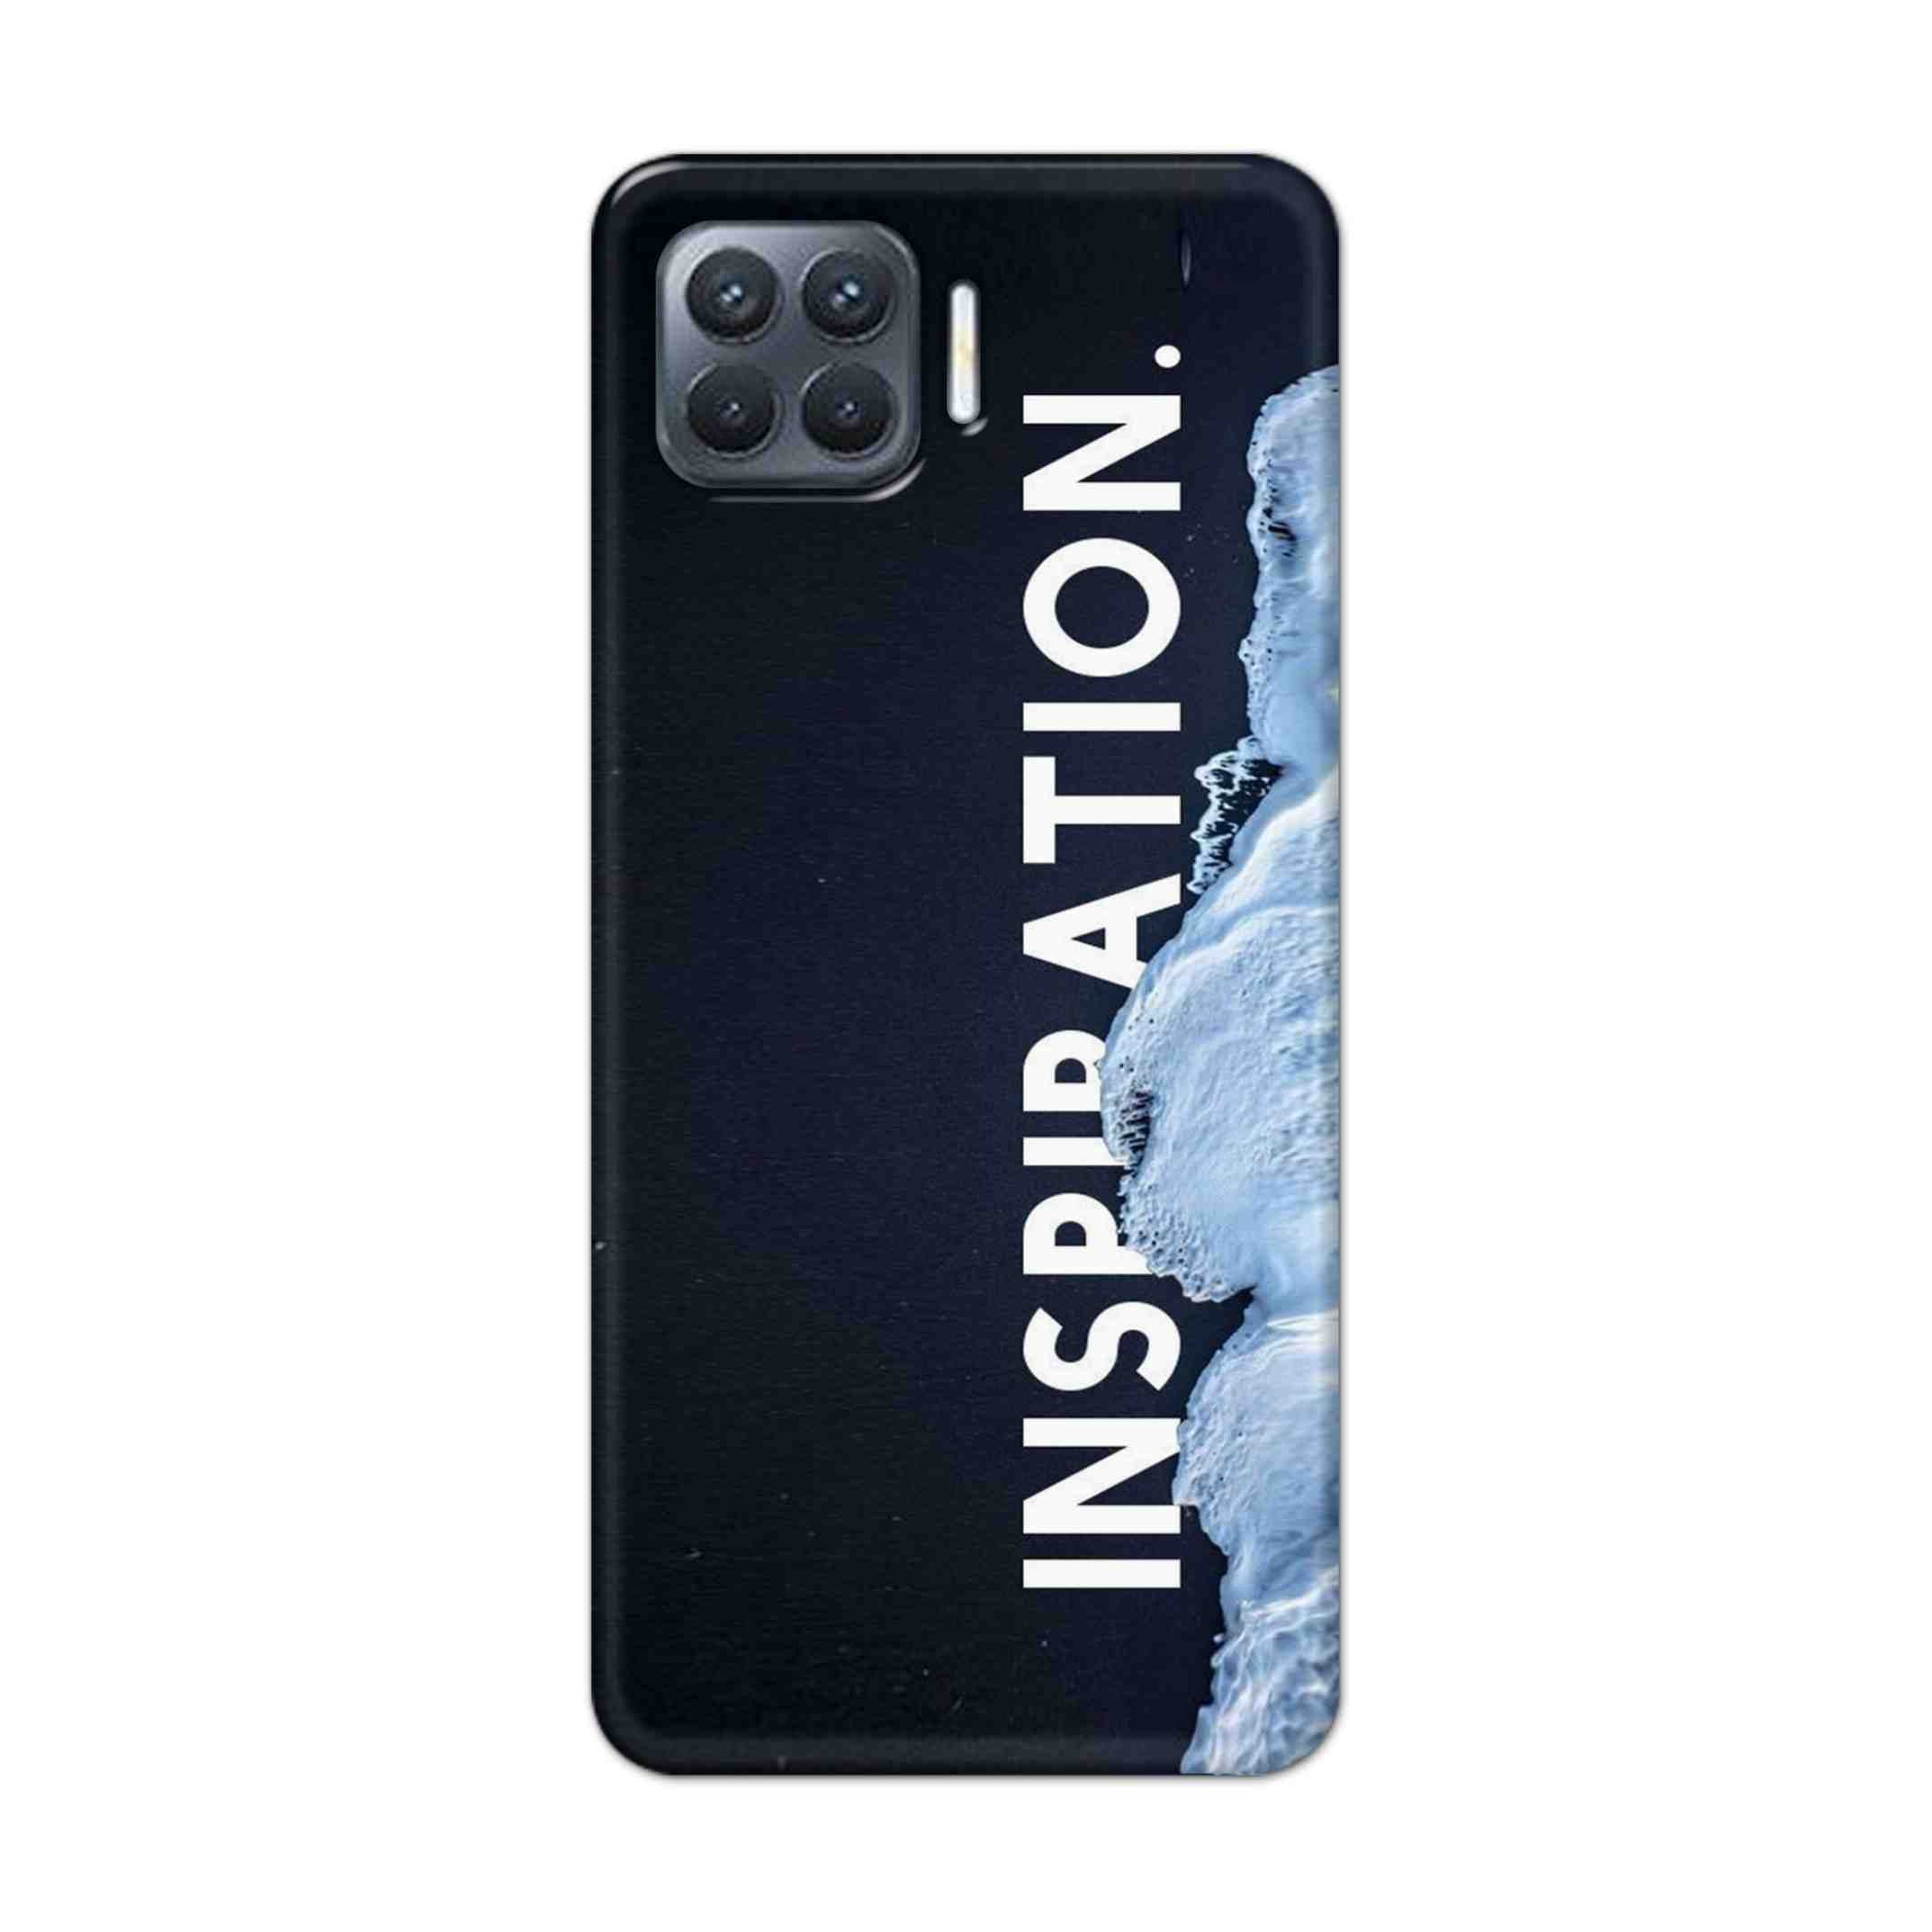 Buy Inspiration Hard Back Mobile Phone Case Cover For Oppo F17 Pro Online